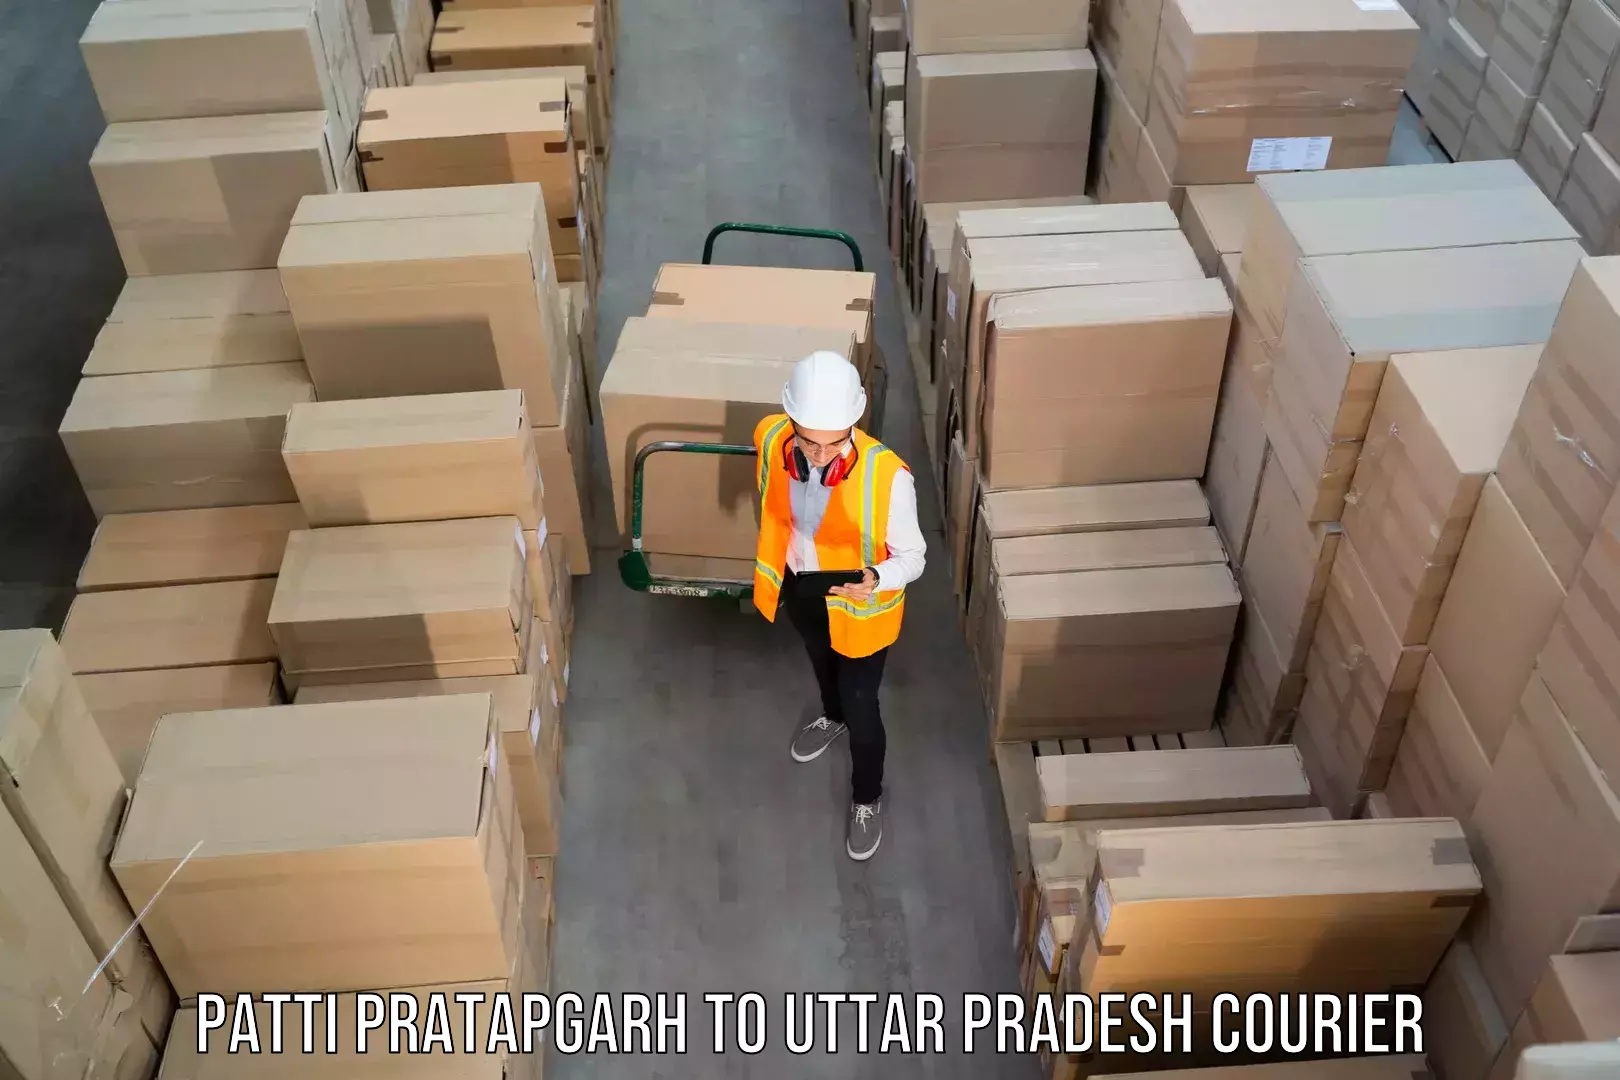 Next-day freight services Patti Pratapgarh to Shamli